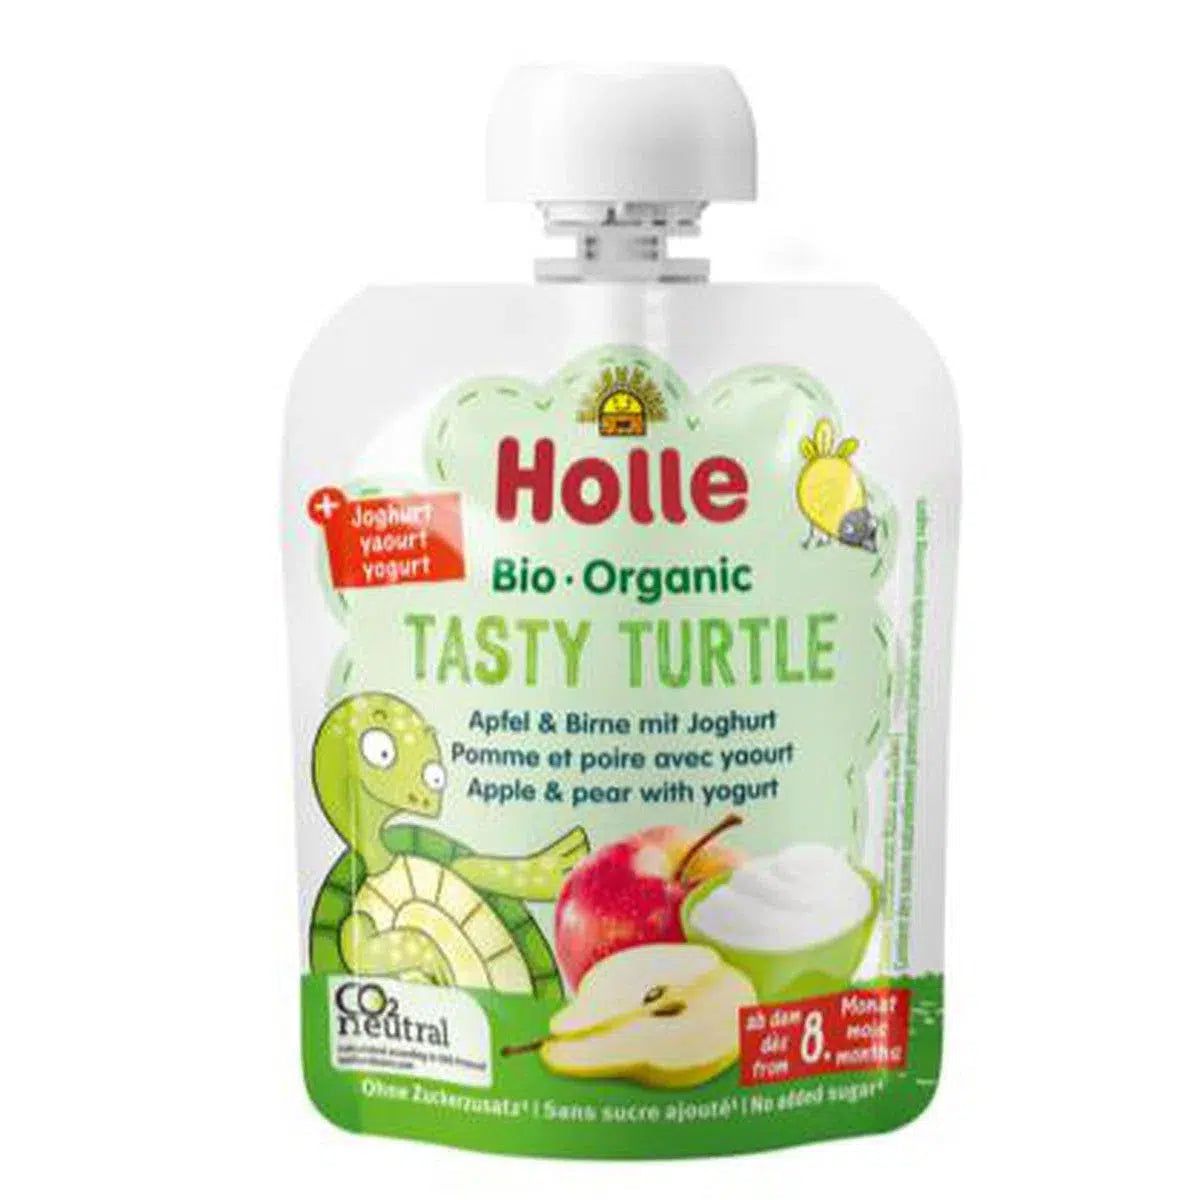 Holle Yogurt Tasty Turtle - Apple & Pear with Yogurt (85 g), from 8 months